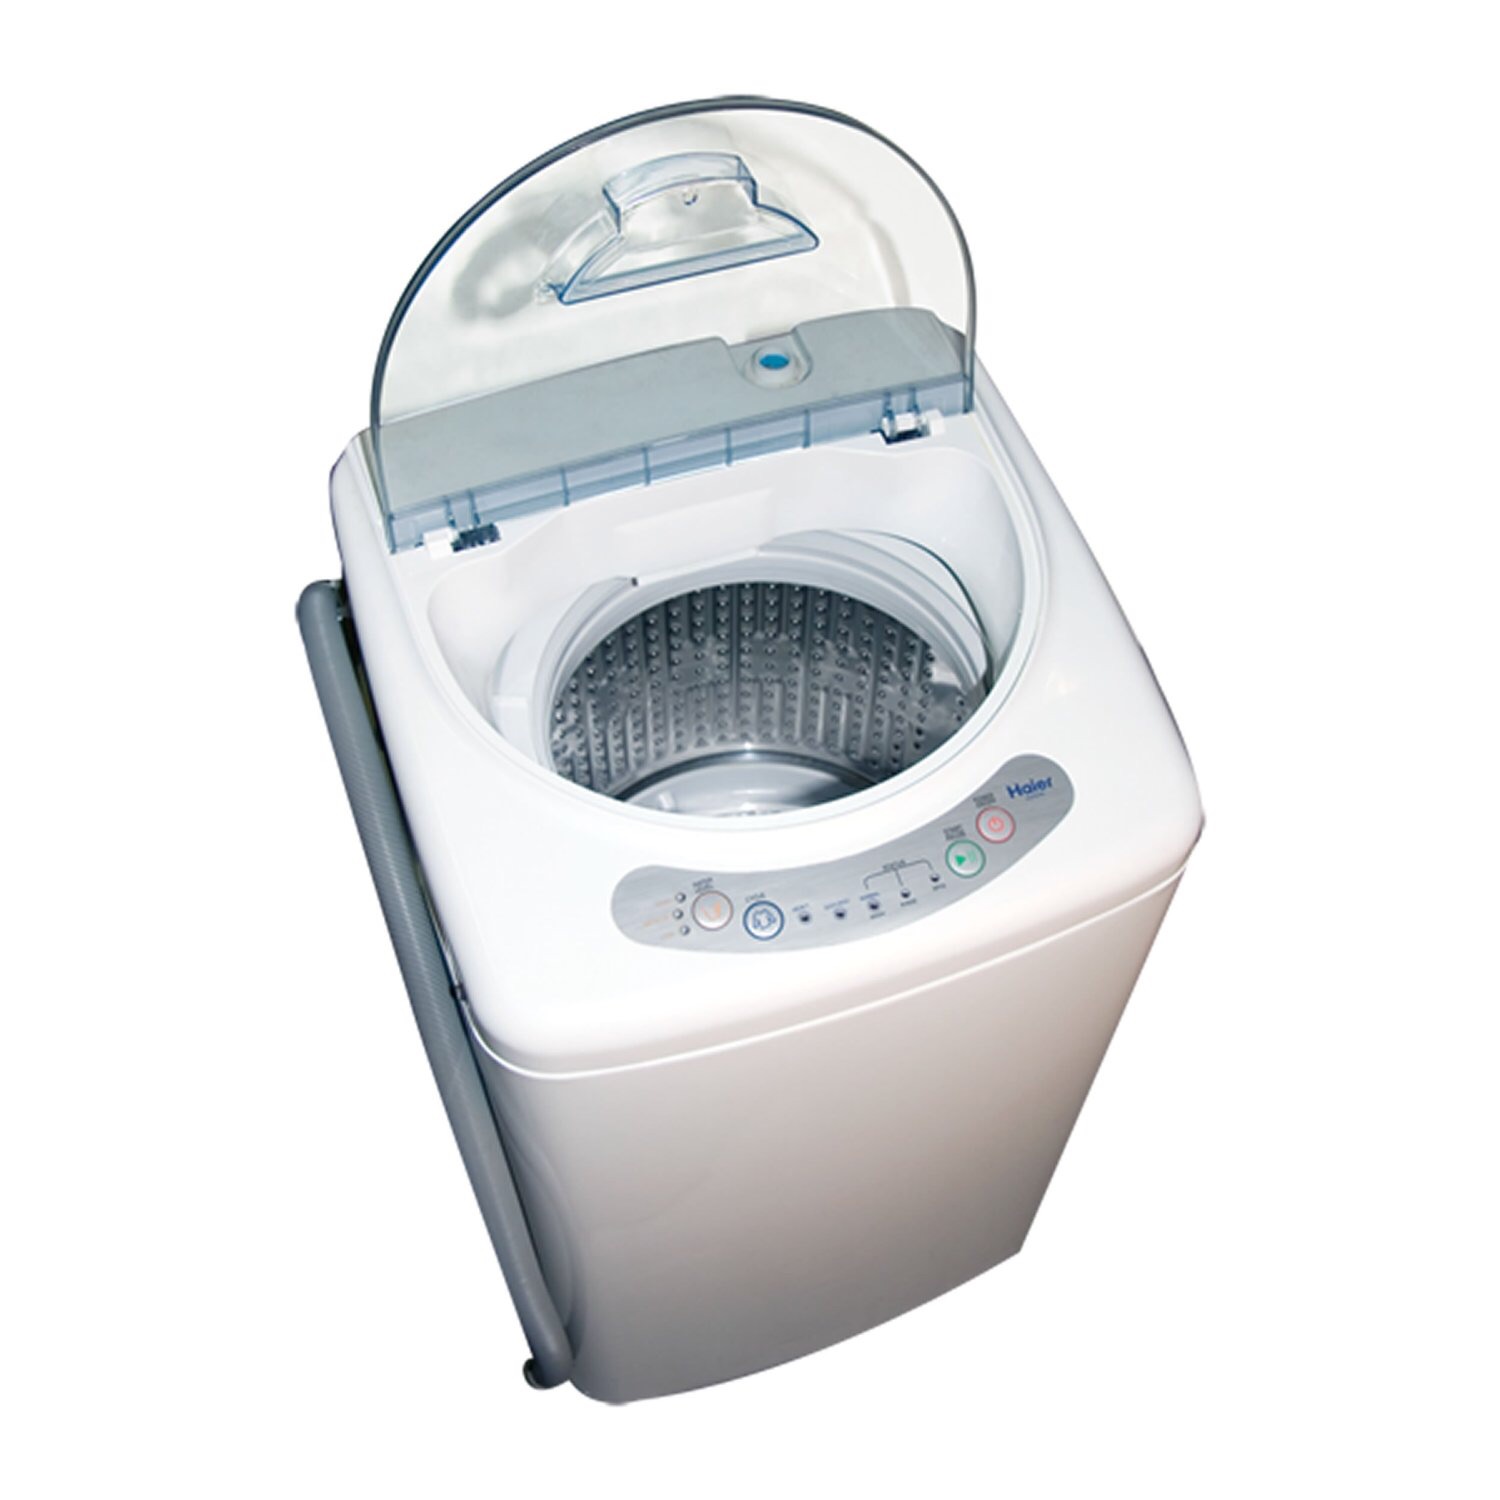 Panda Portable Washing Machine, 10 lbs. Capacity, 3 Water Levels